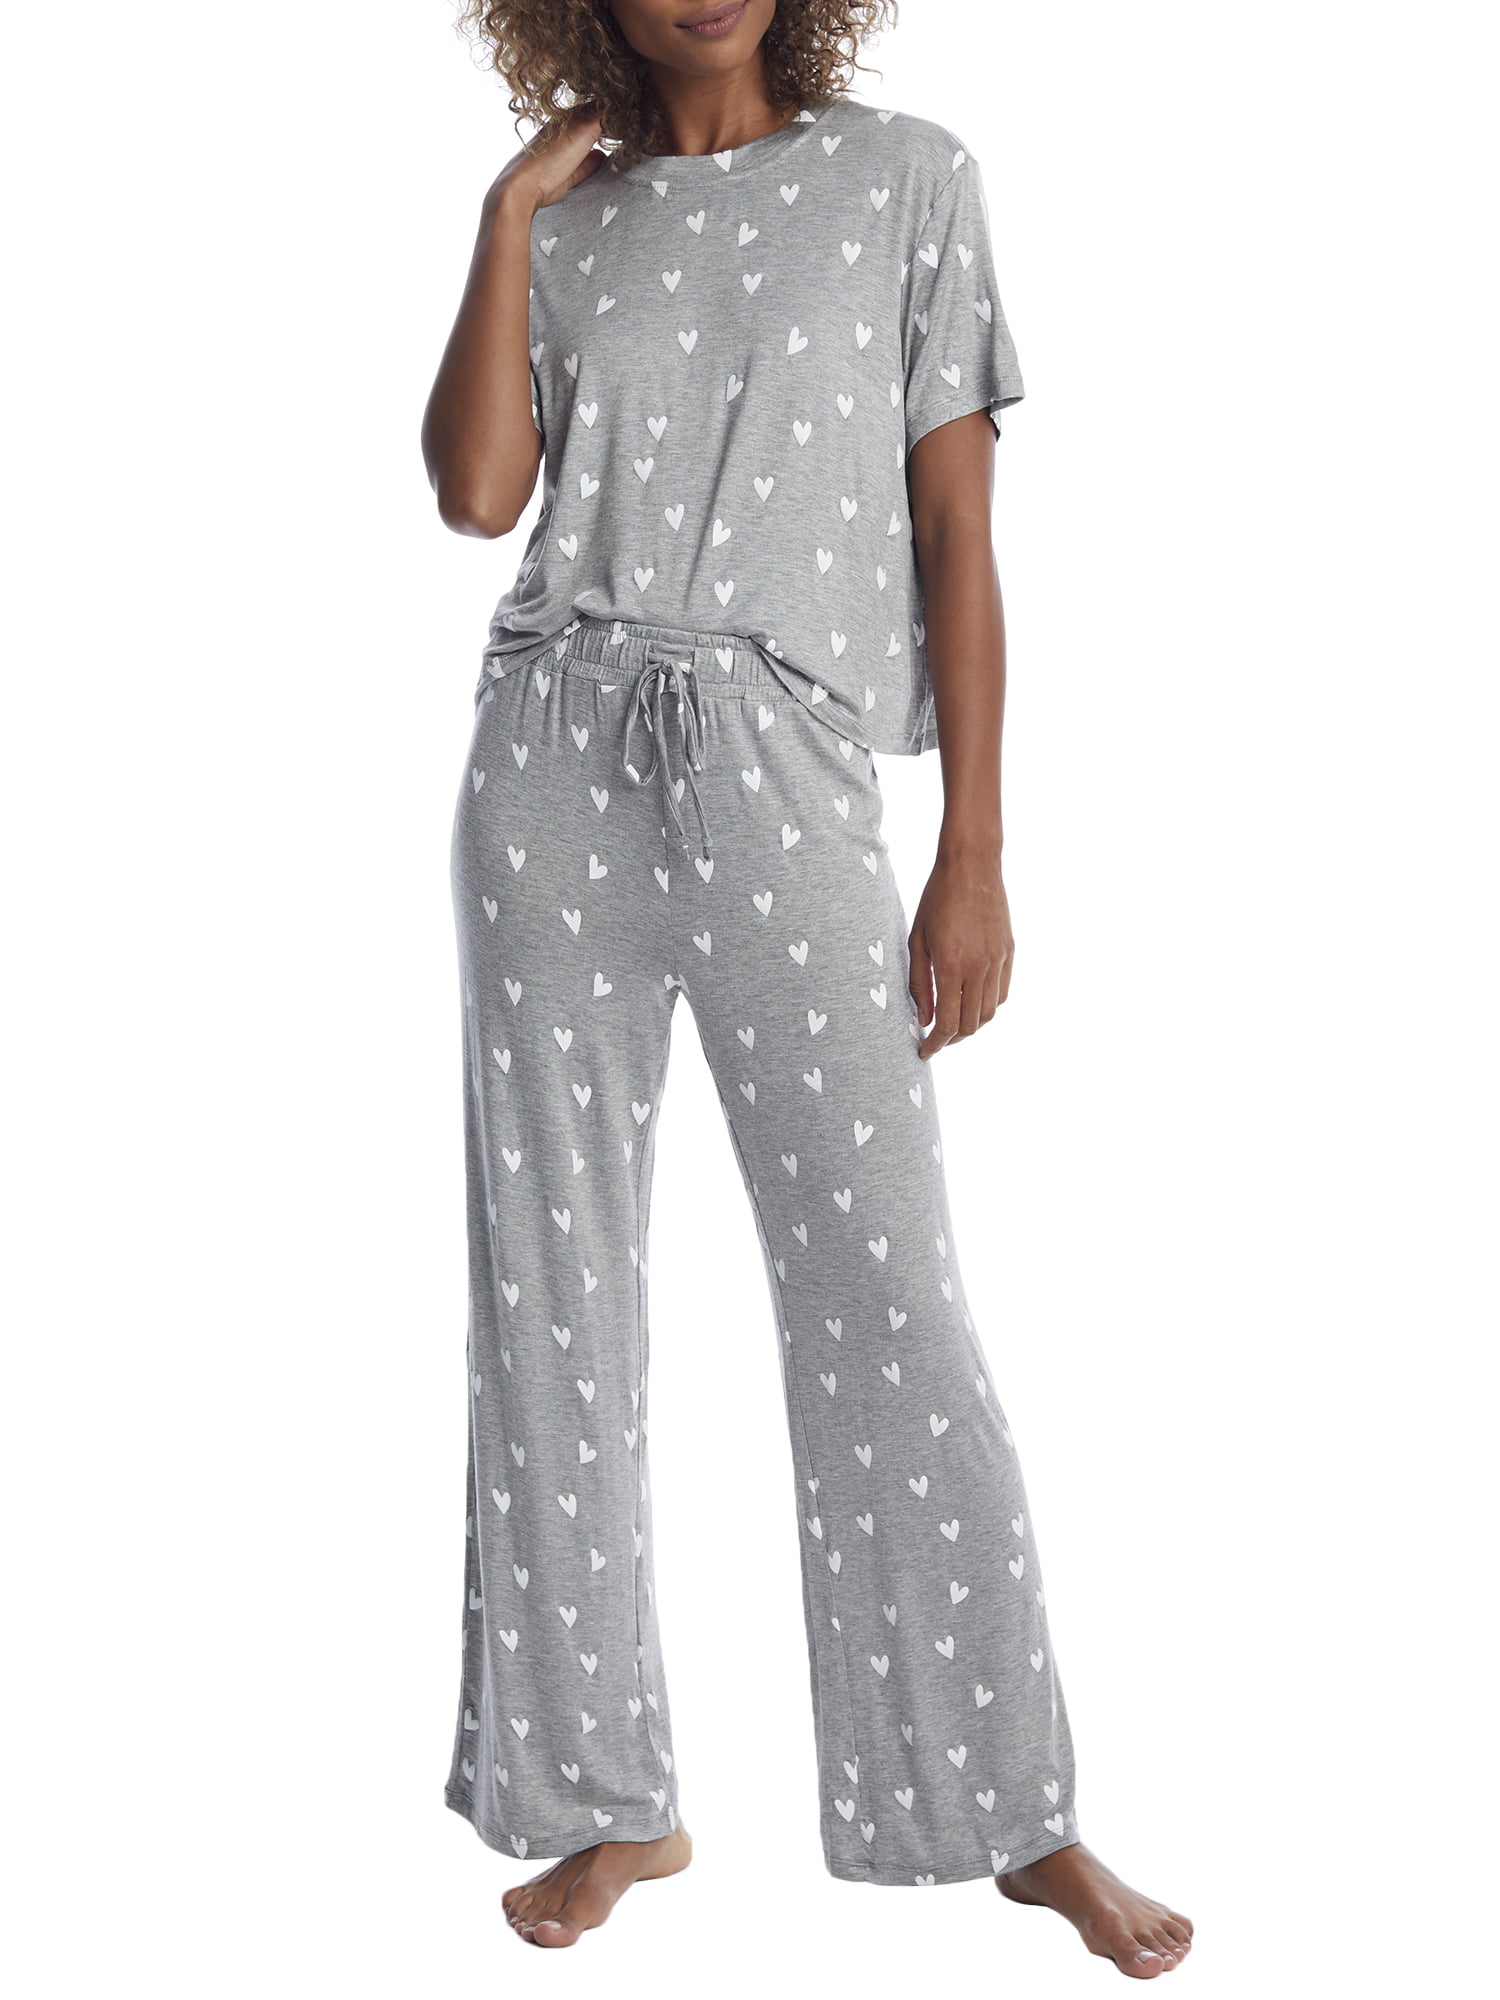 Honeydew Intimates Womens Hearts All American Knit Pajama Set  Style-33982-HEART 